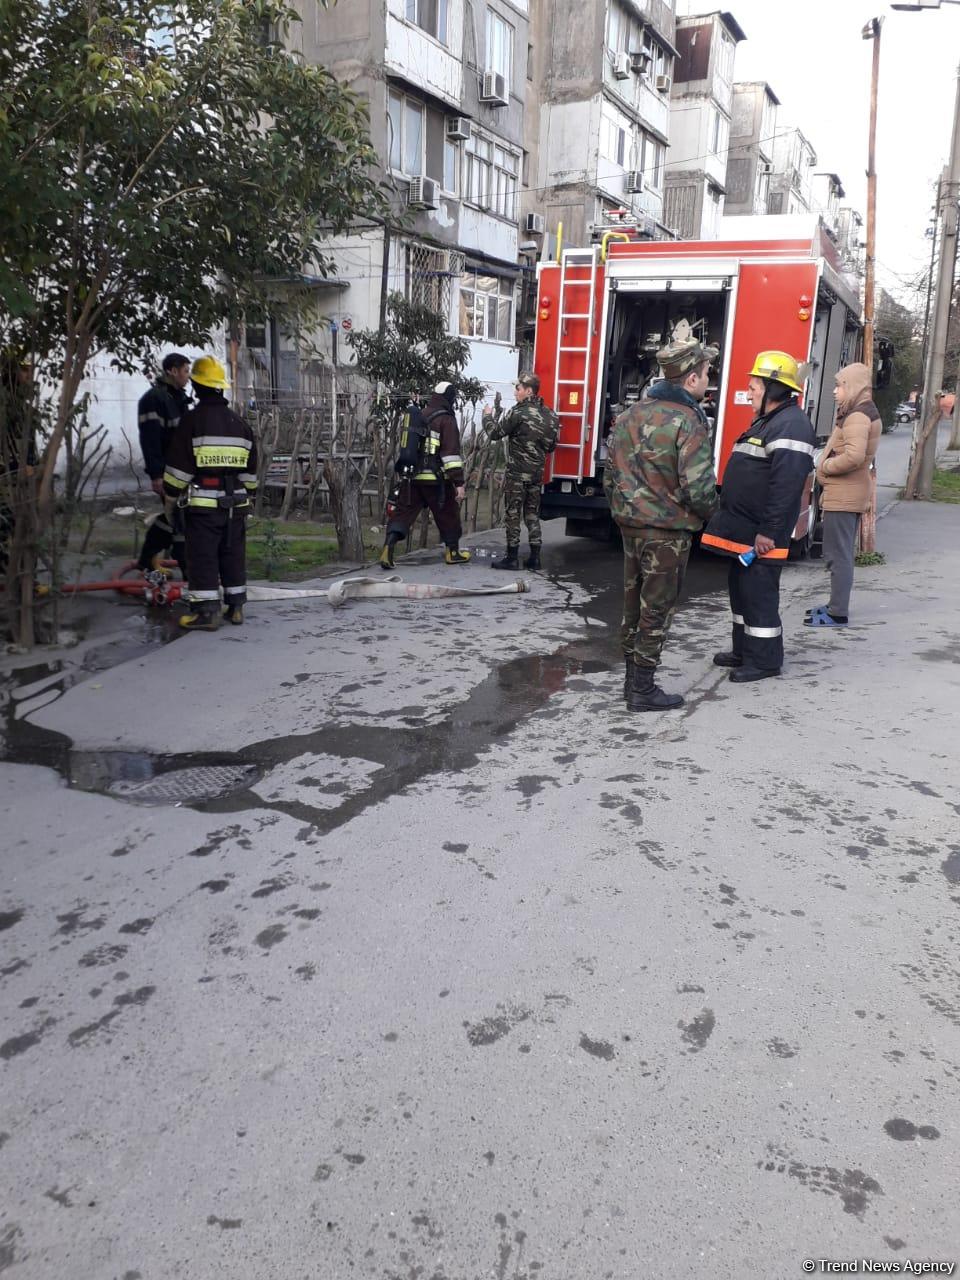 Пожар в жилом здании Баку потушен: причина возгорания - короткое замыкание (ФОТО) (Обновлено)